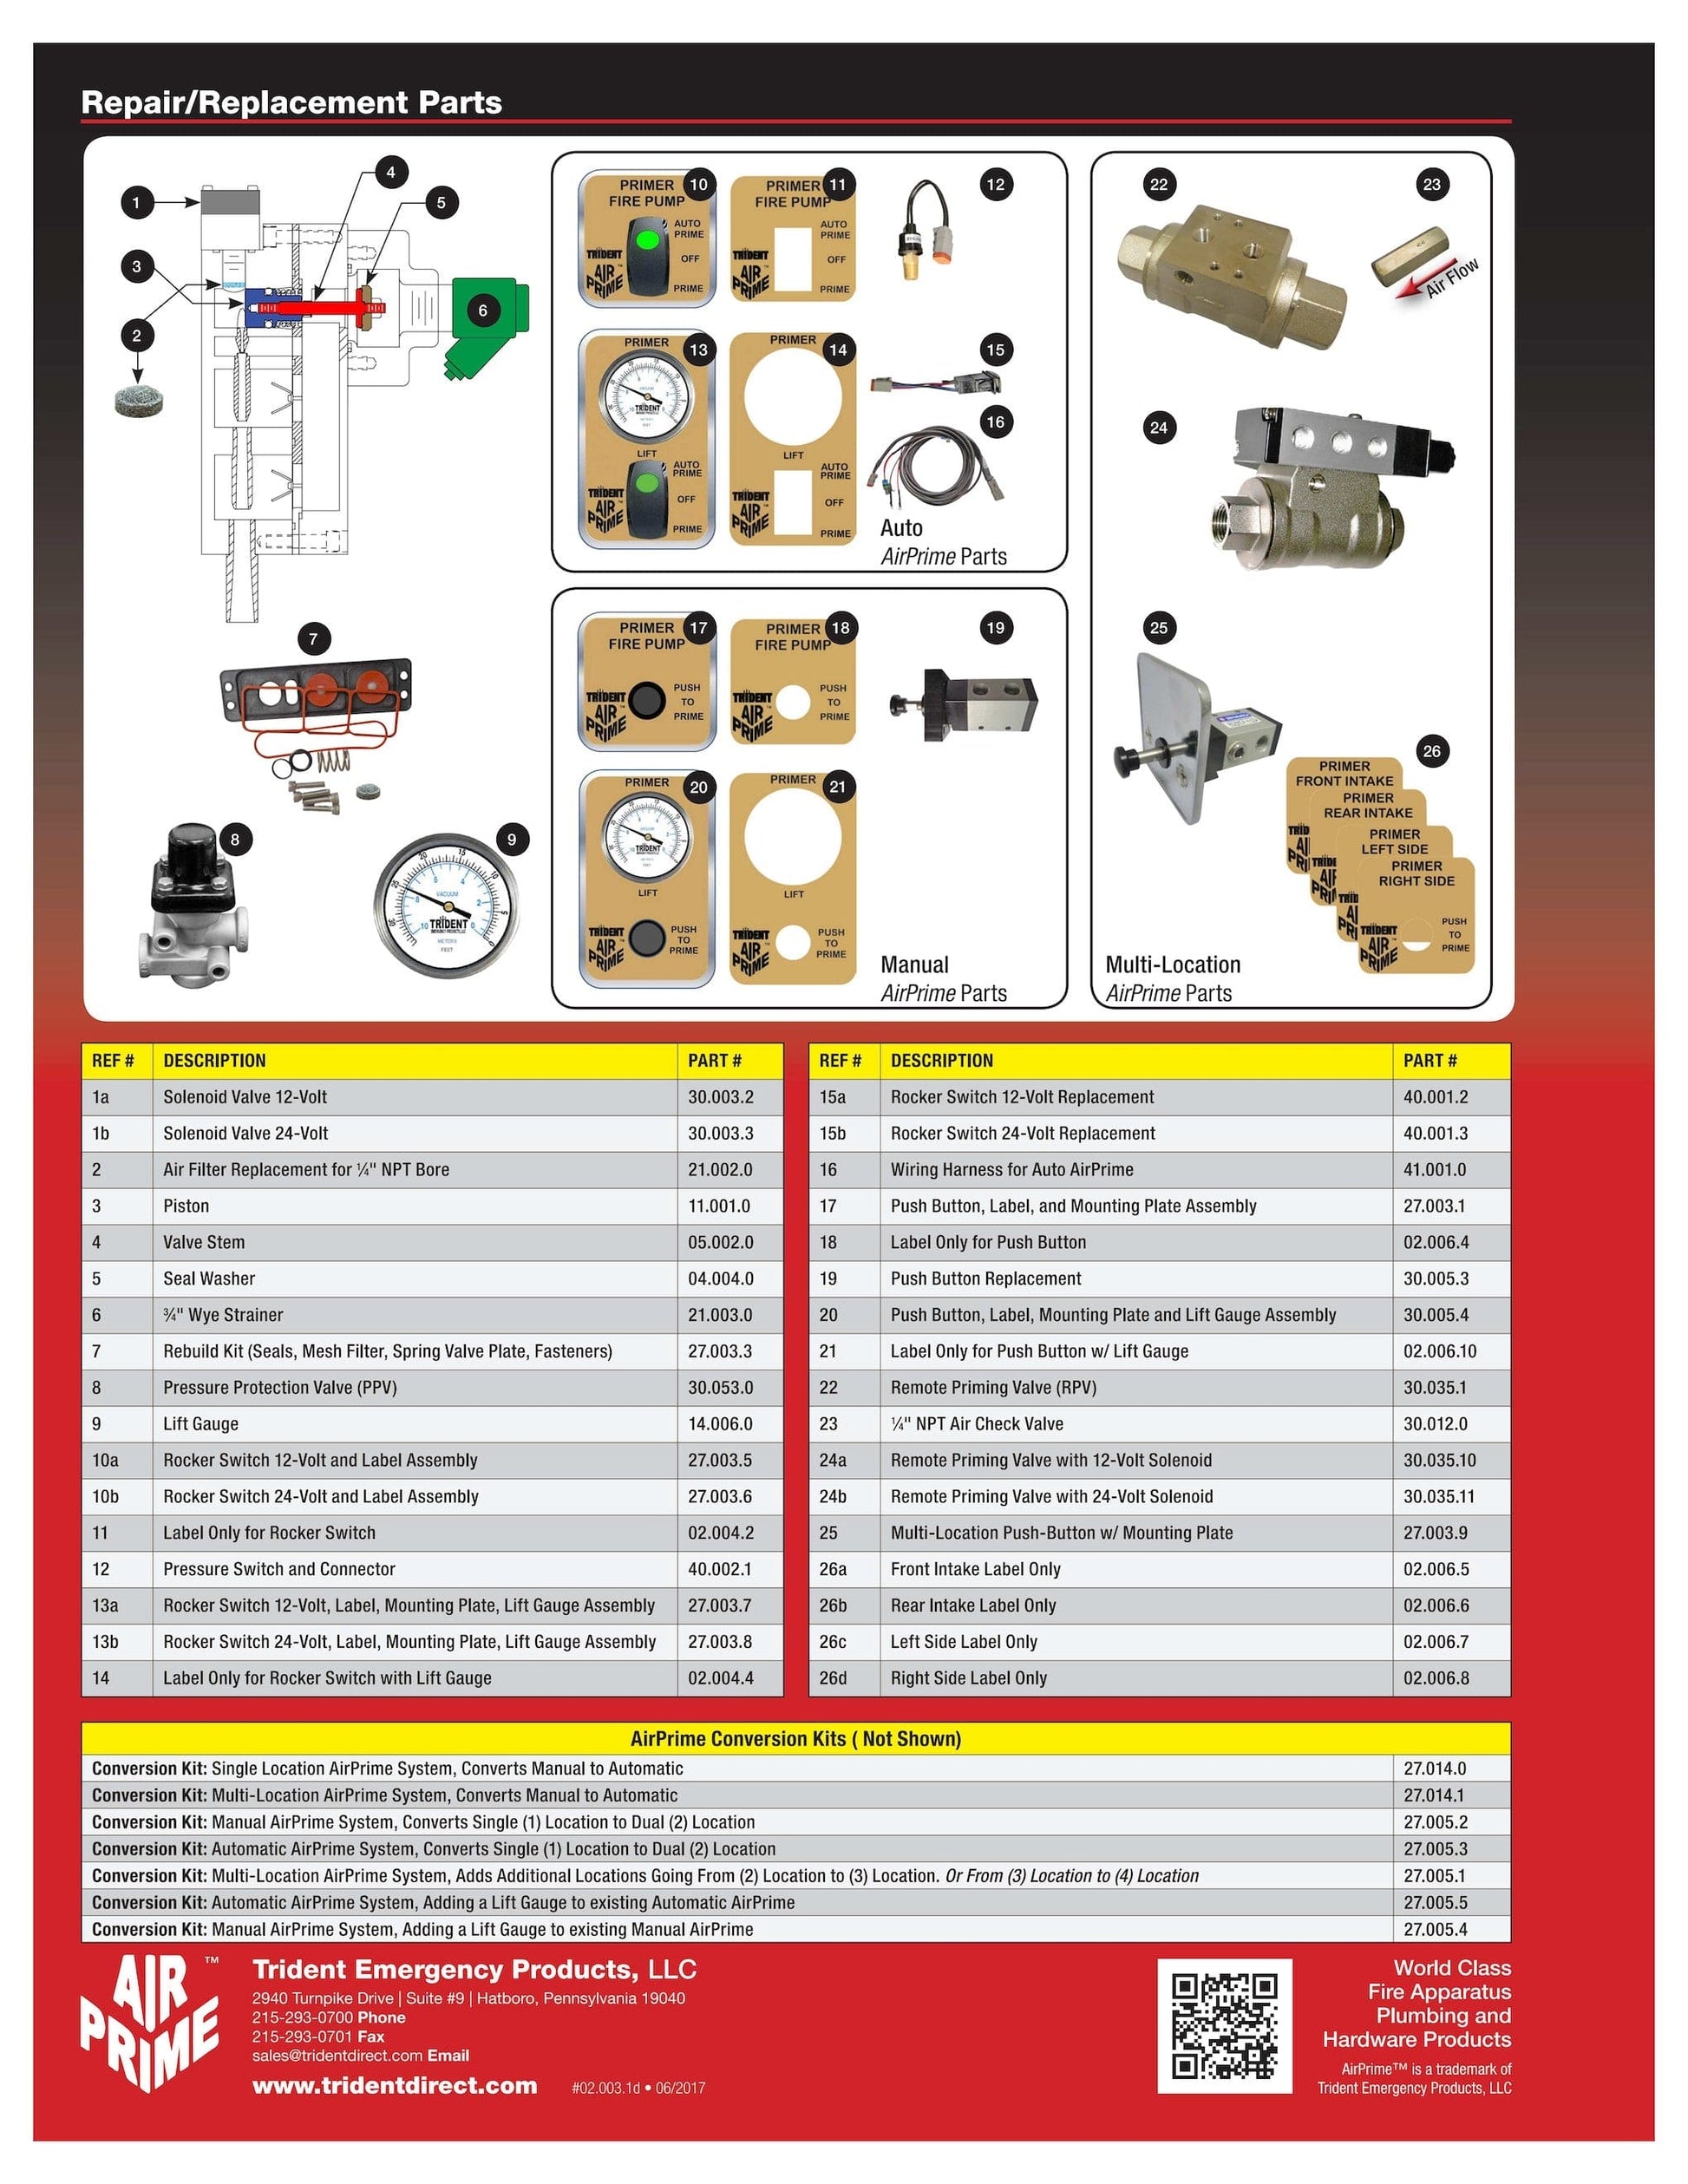 Trident  Air Primer Parts - Rocker Switch 12-Volt Replacement - 40.001.2